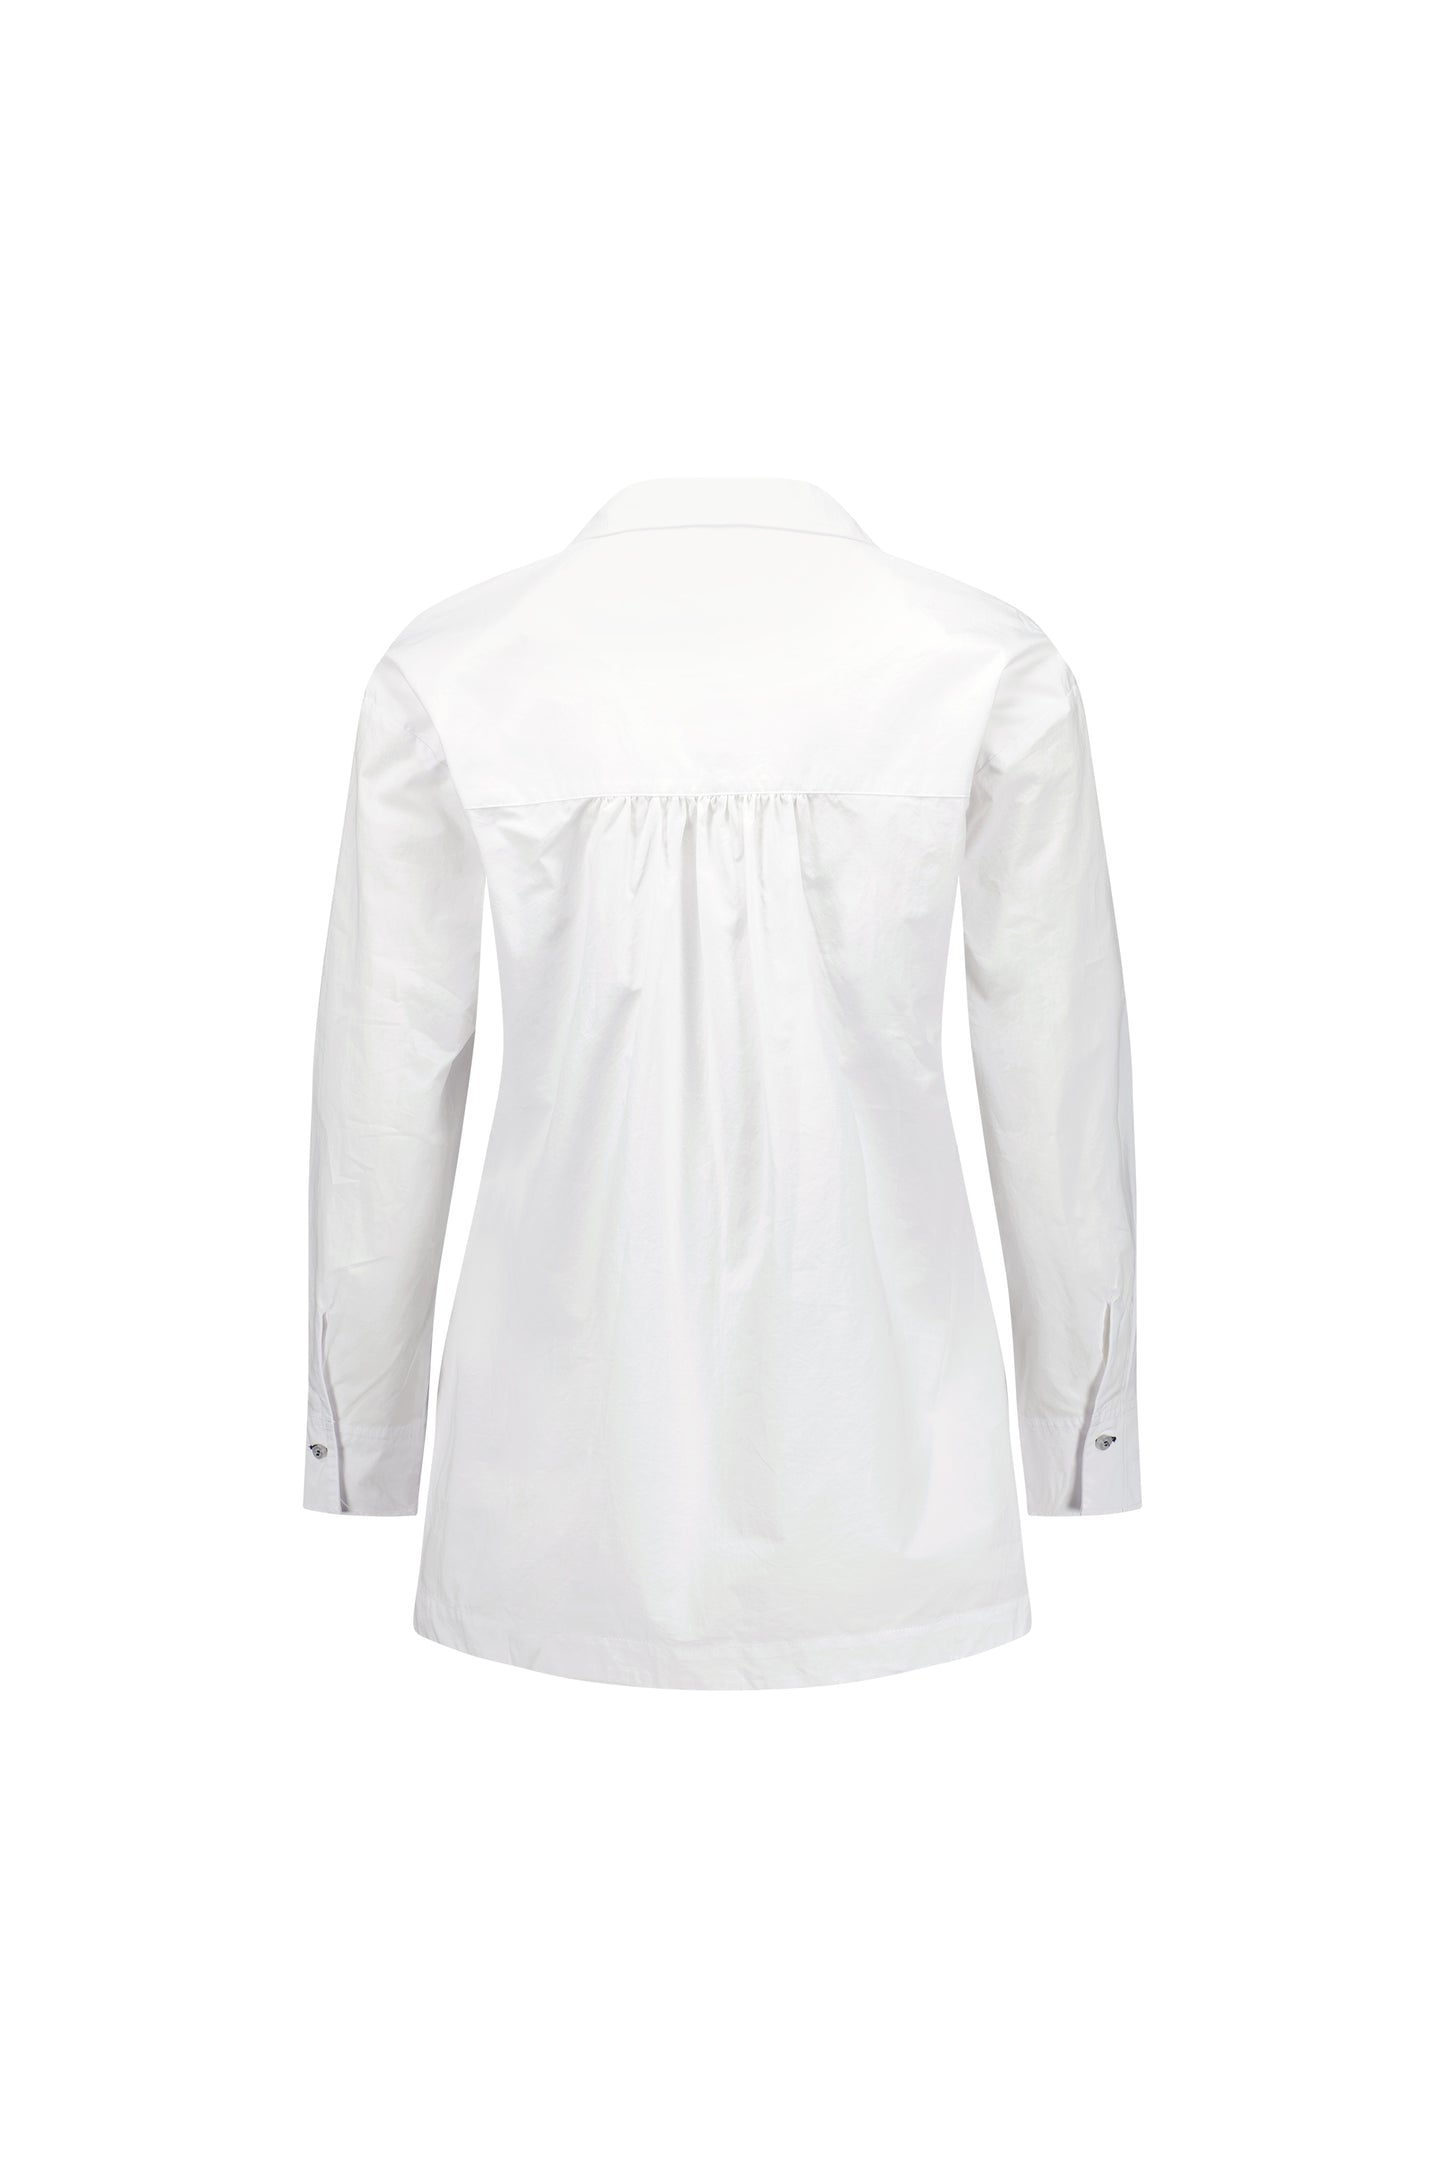 White Contrast Stitch Shirt